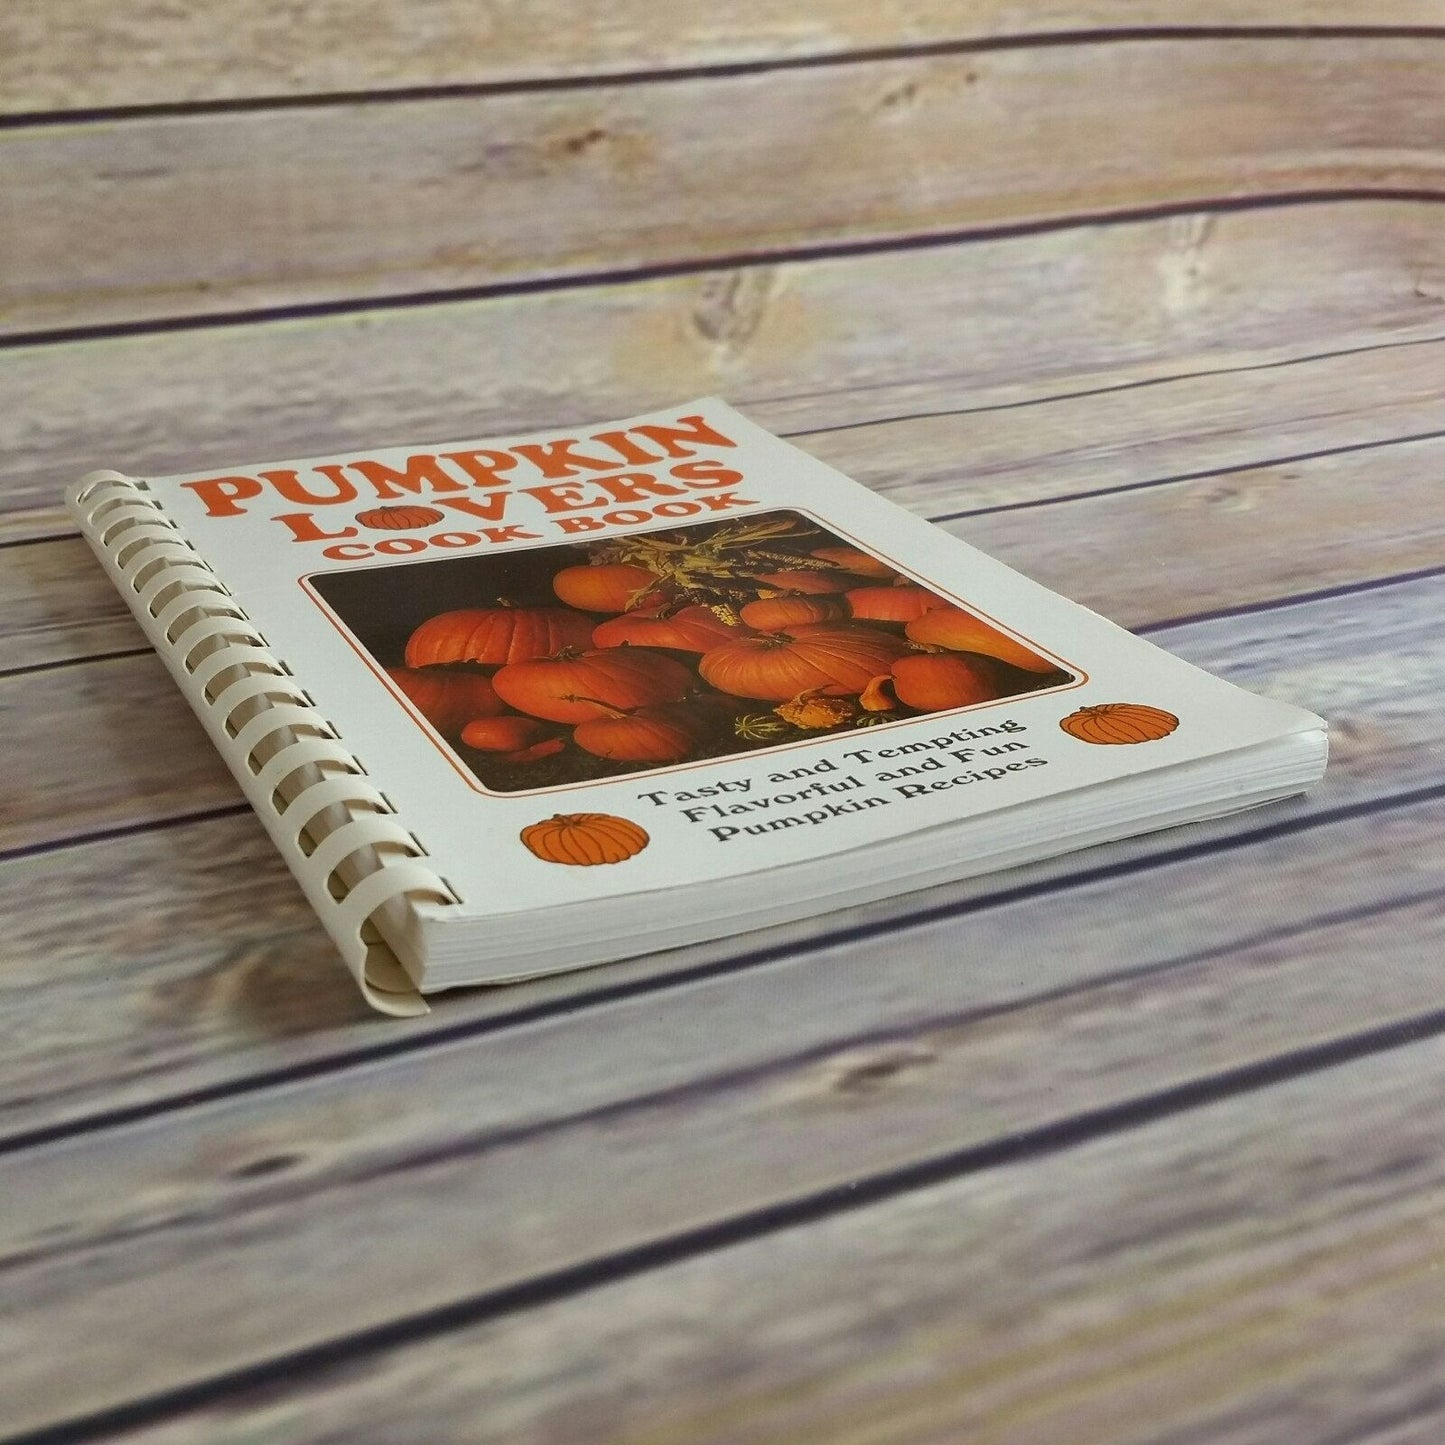 Vintage Cookbook Pumpkin Lovers Cook Book 1998 Over 175 Recipes Spiral Bound Paperback Pumpkin Recipes Breads Rolls Muffins Cakes Cookies